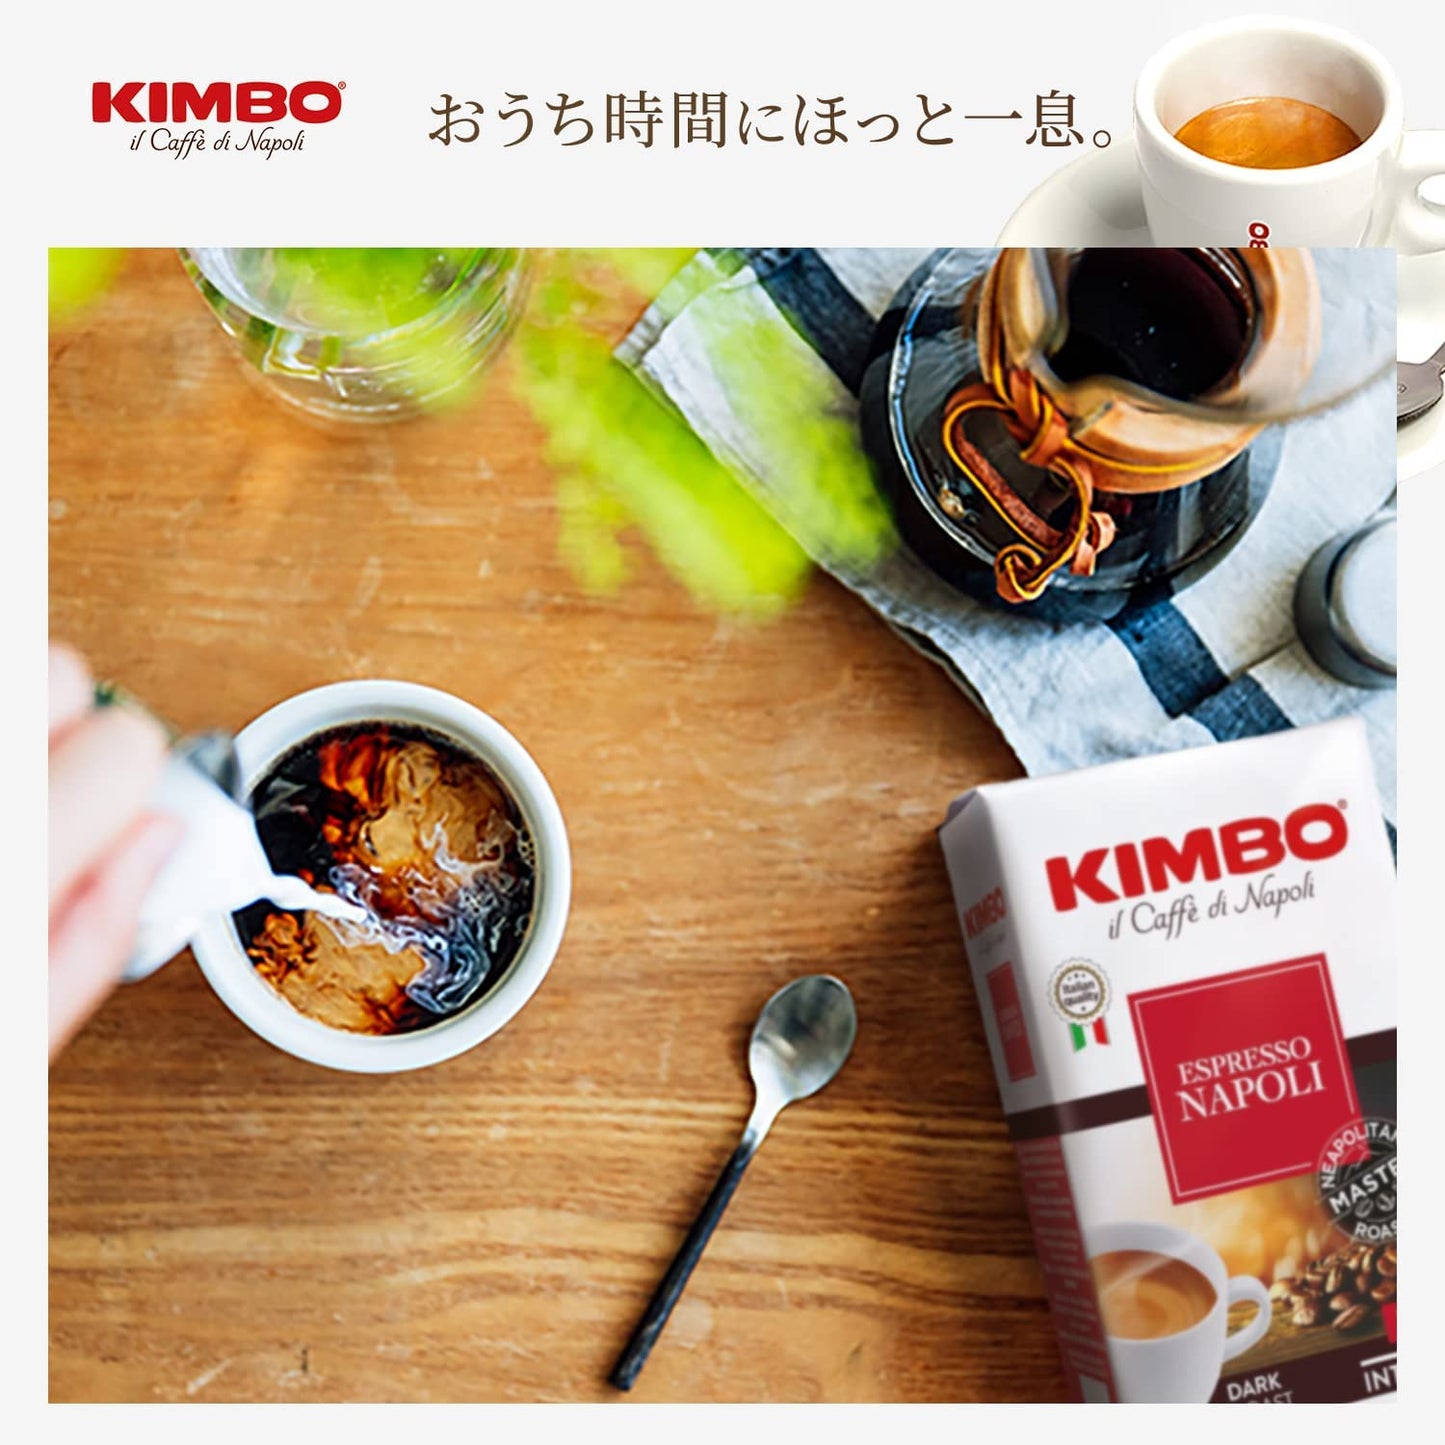 Kimbo Extra Cream 1kg Italian Coffee Beans